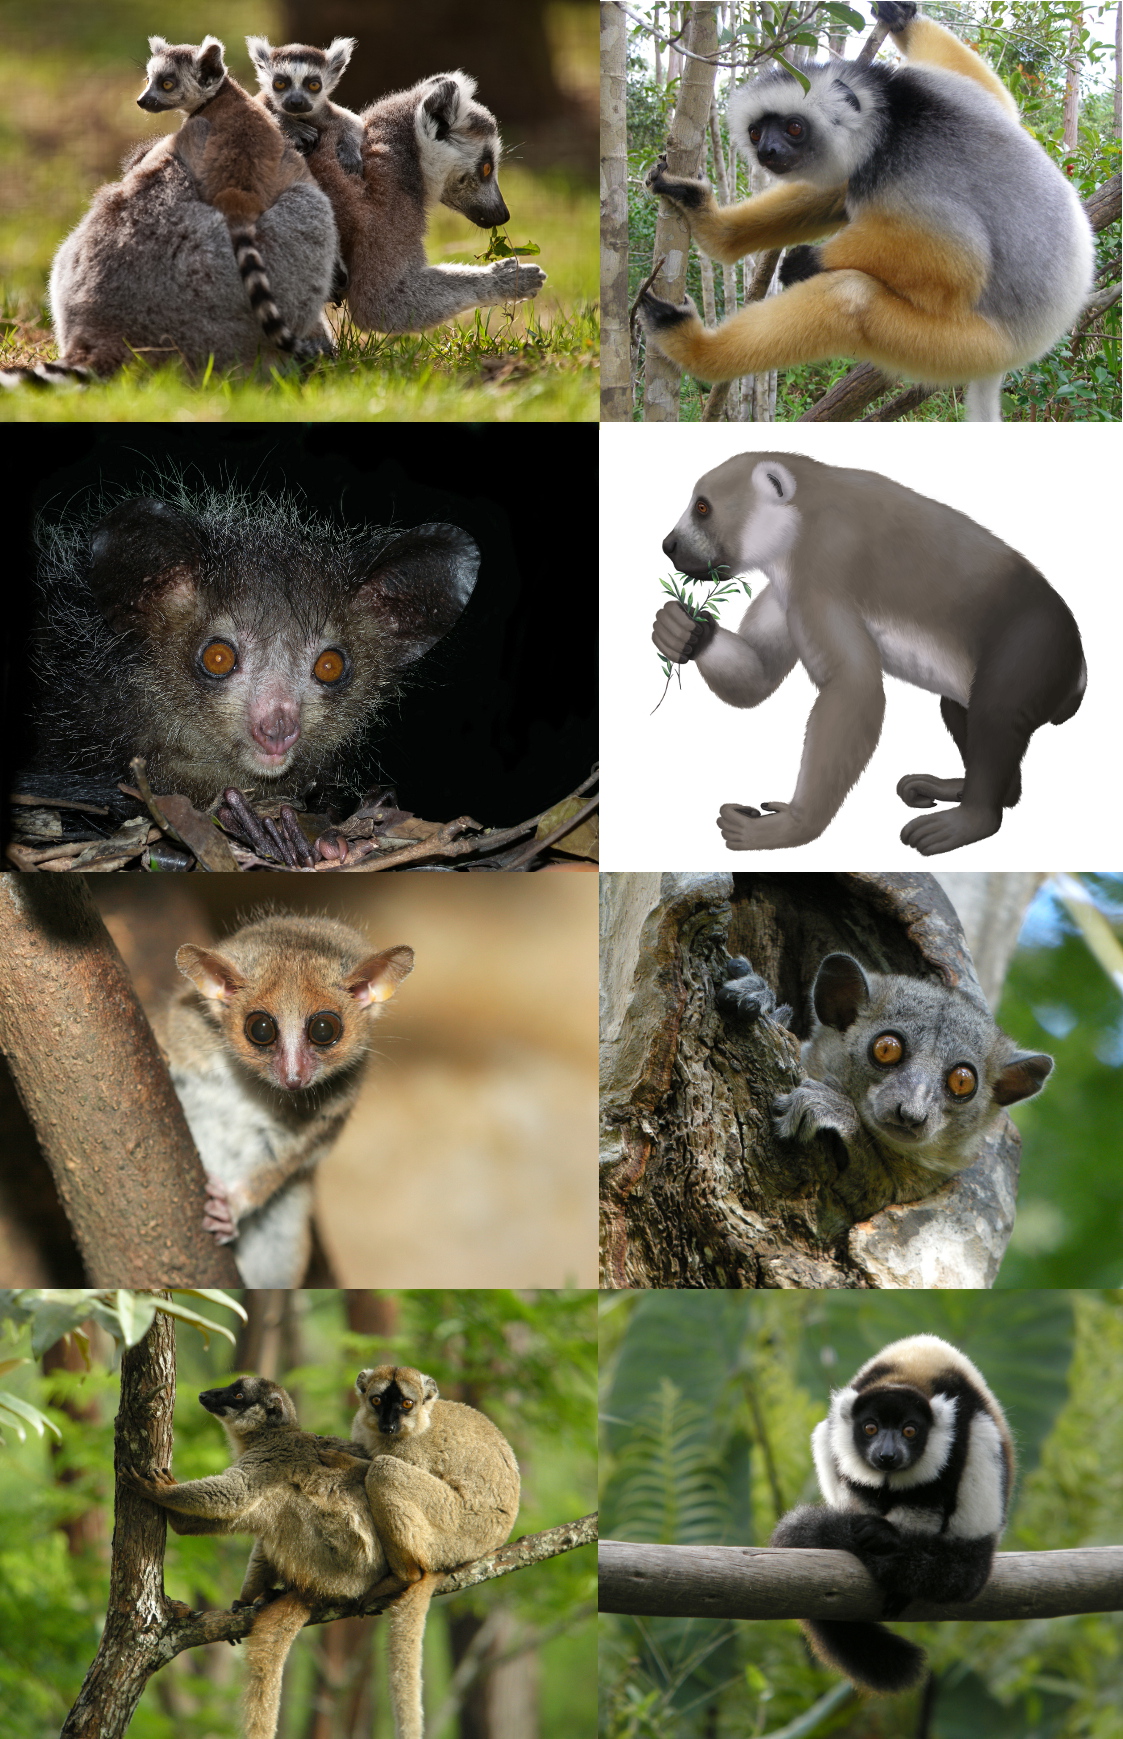 Lemurfolk irl